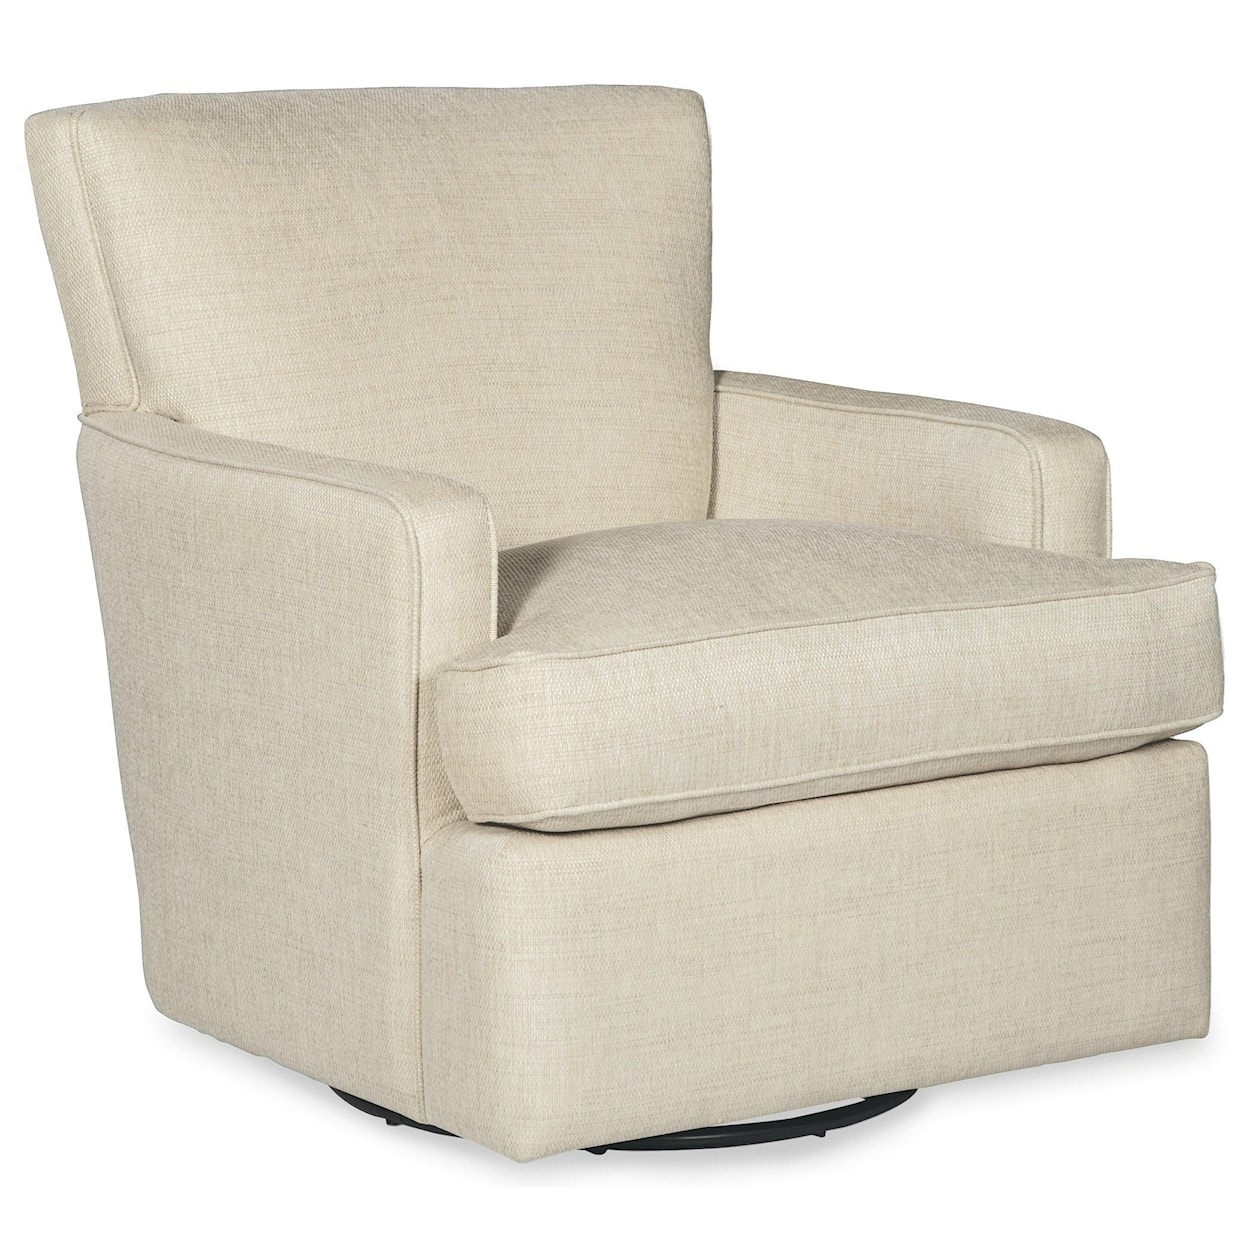 Craftmaster 003510 Swivel Chair